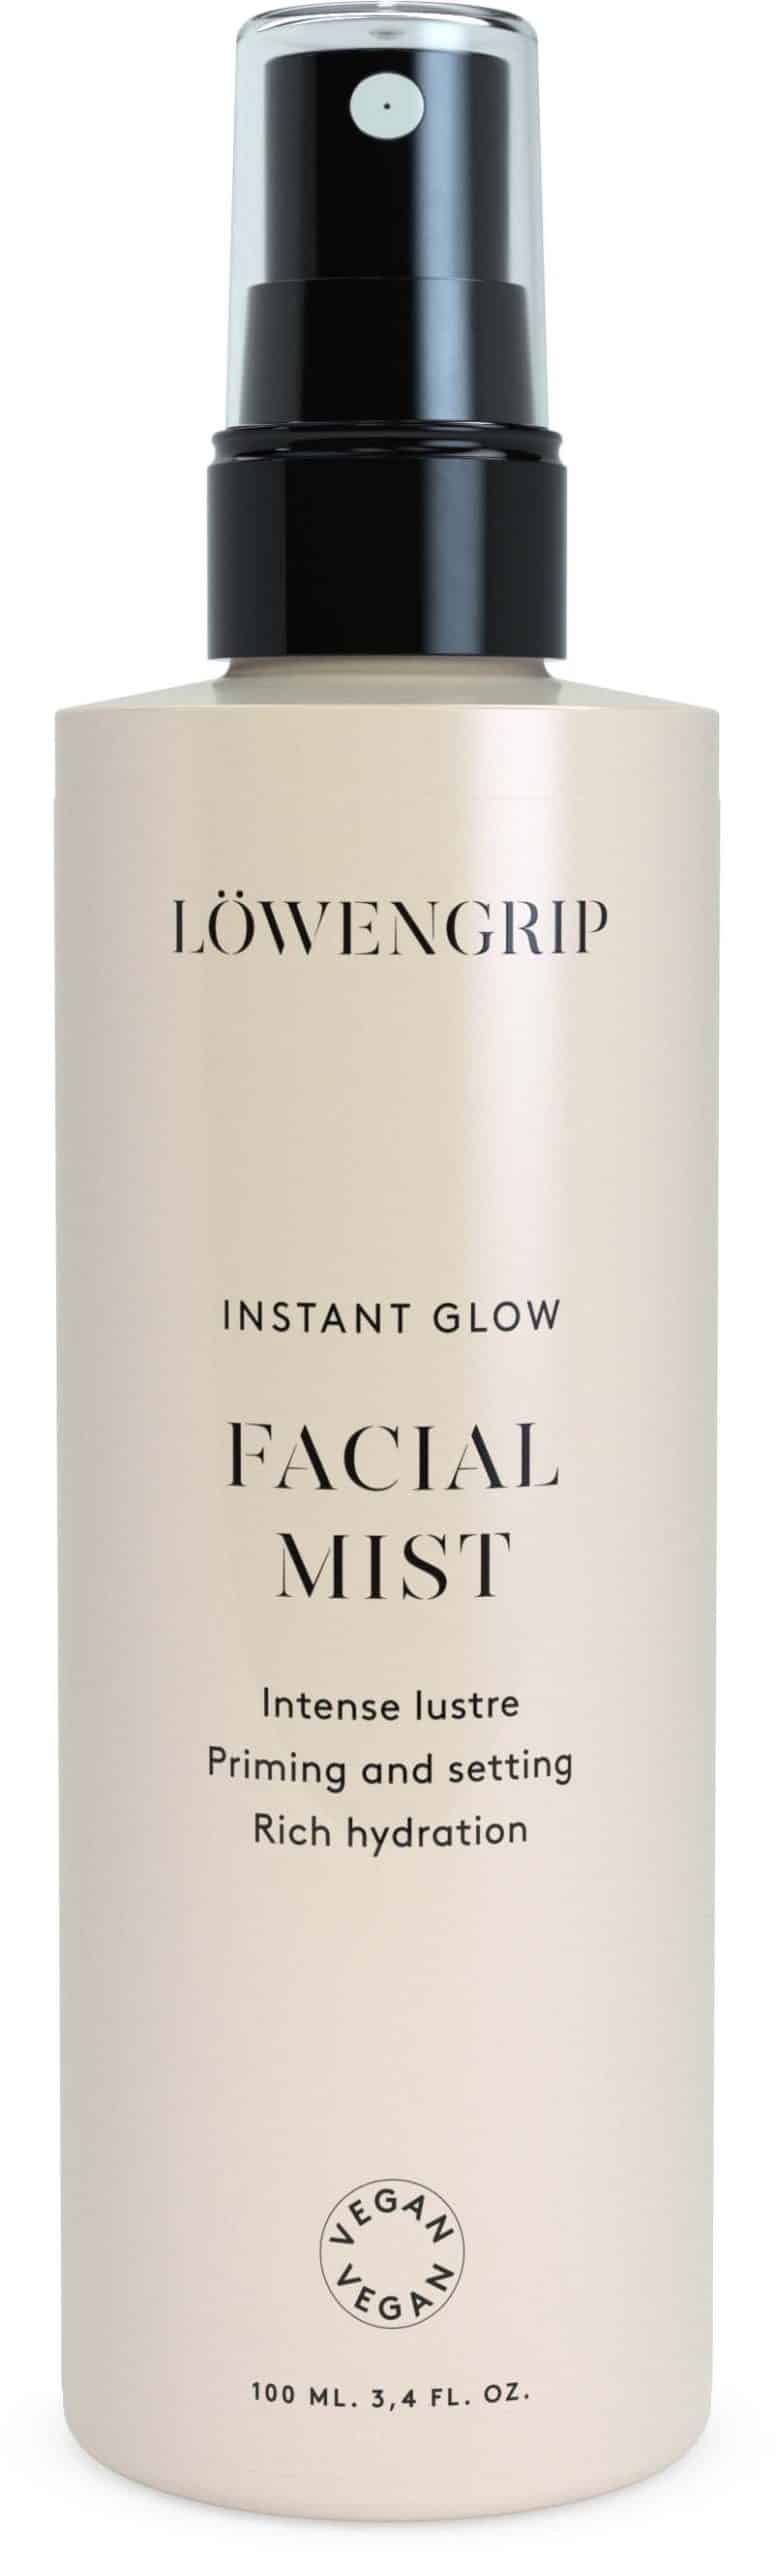 Löwengrip Instant Glow Face Mist (100 ml)